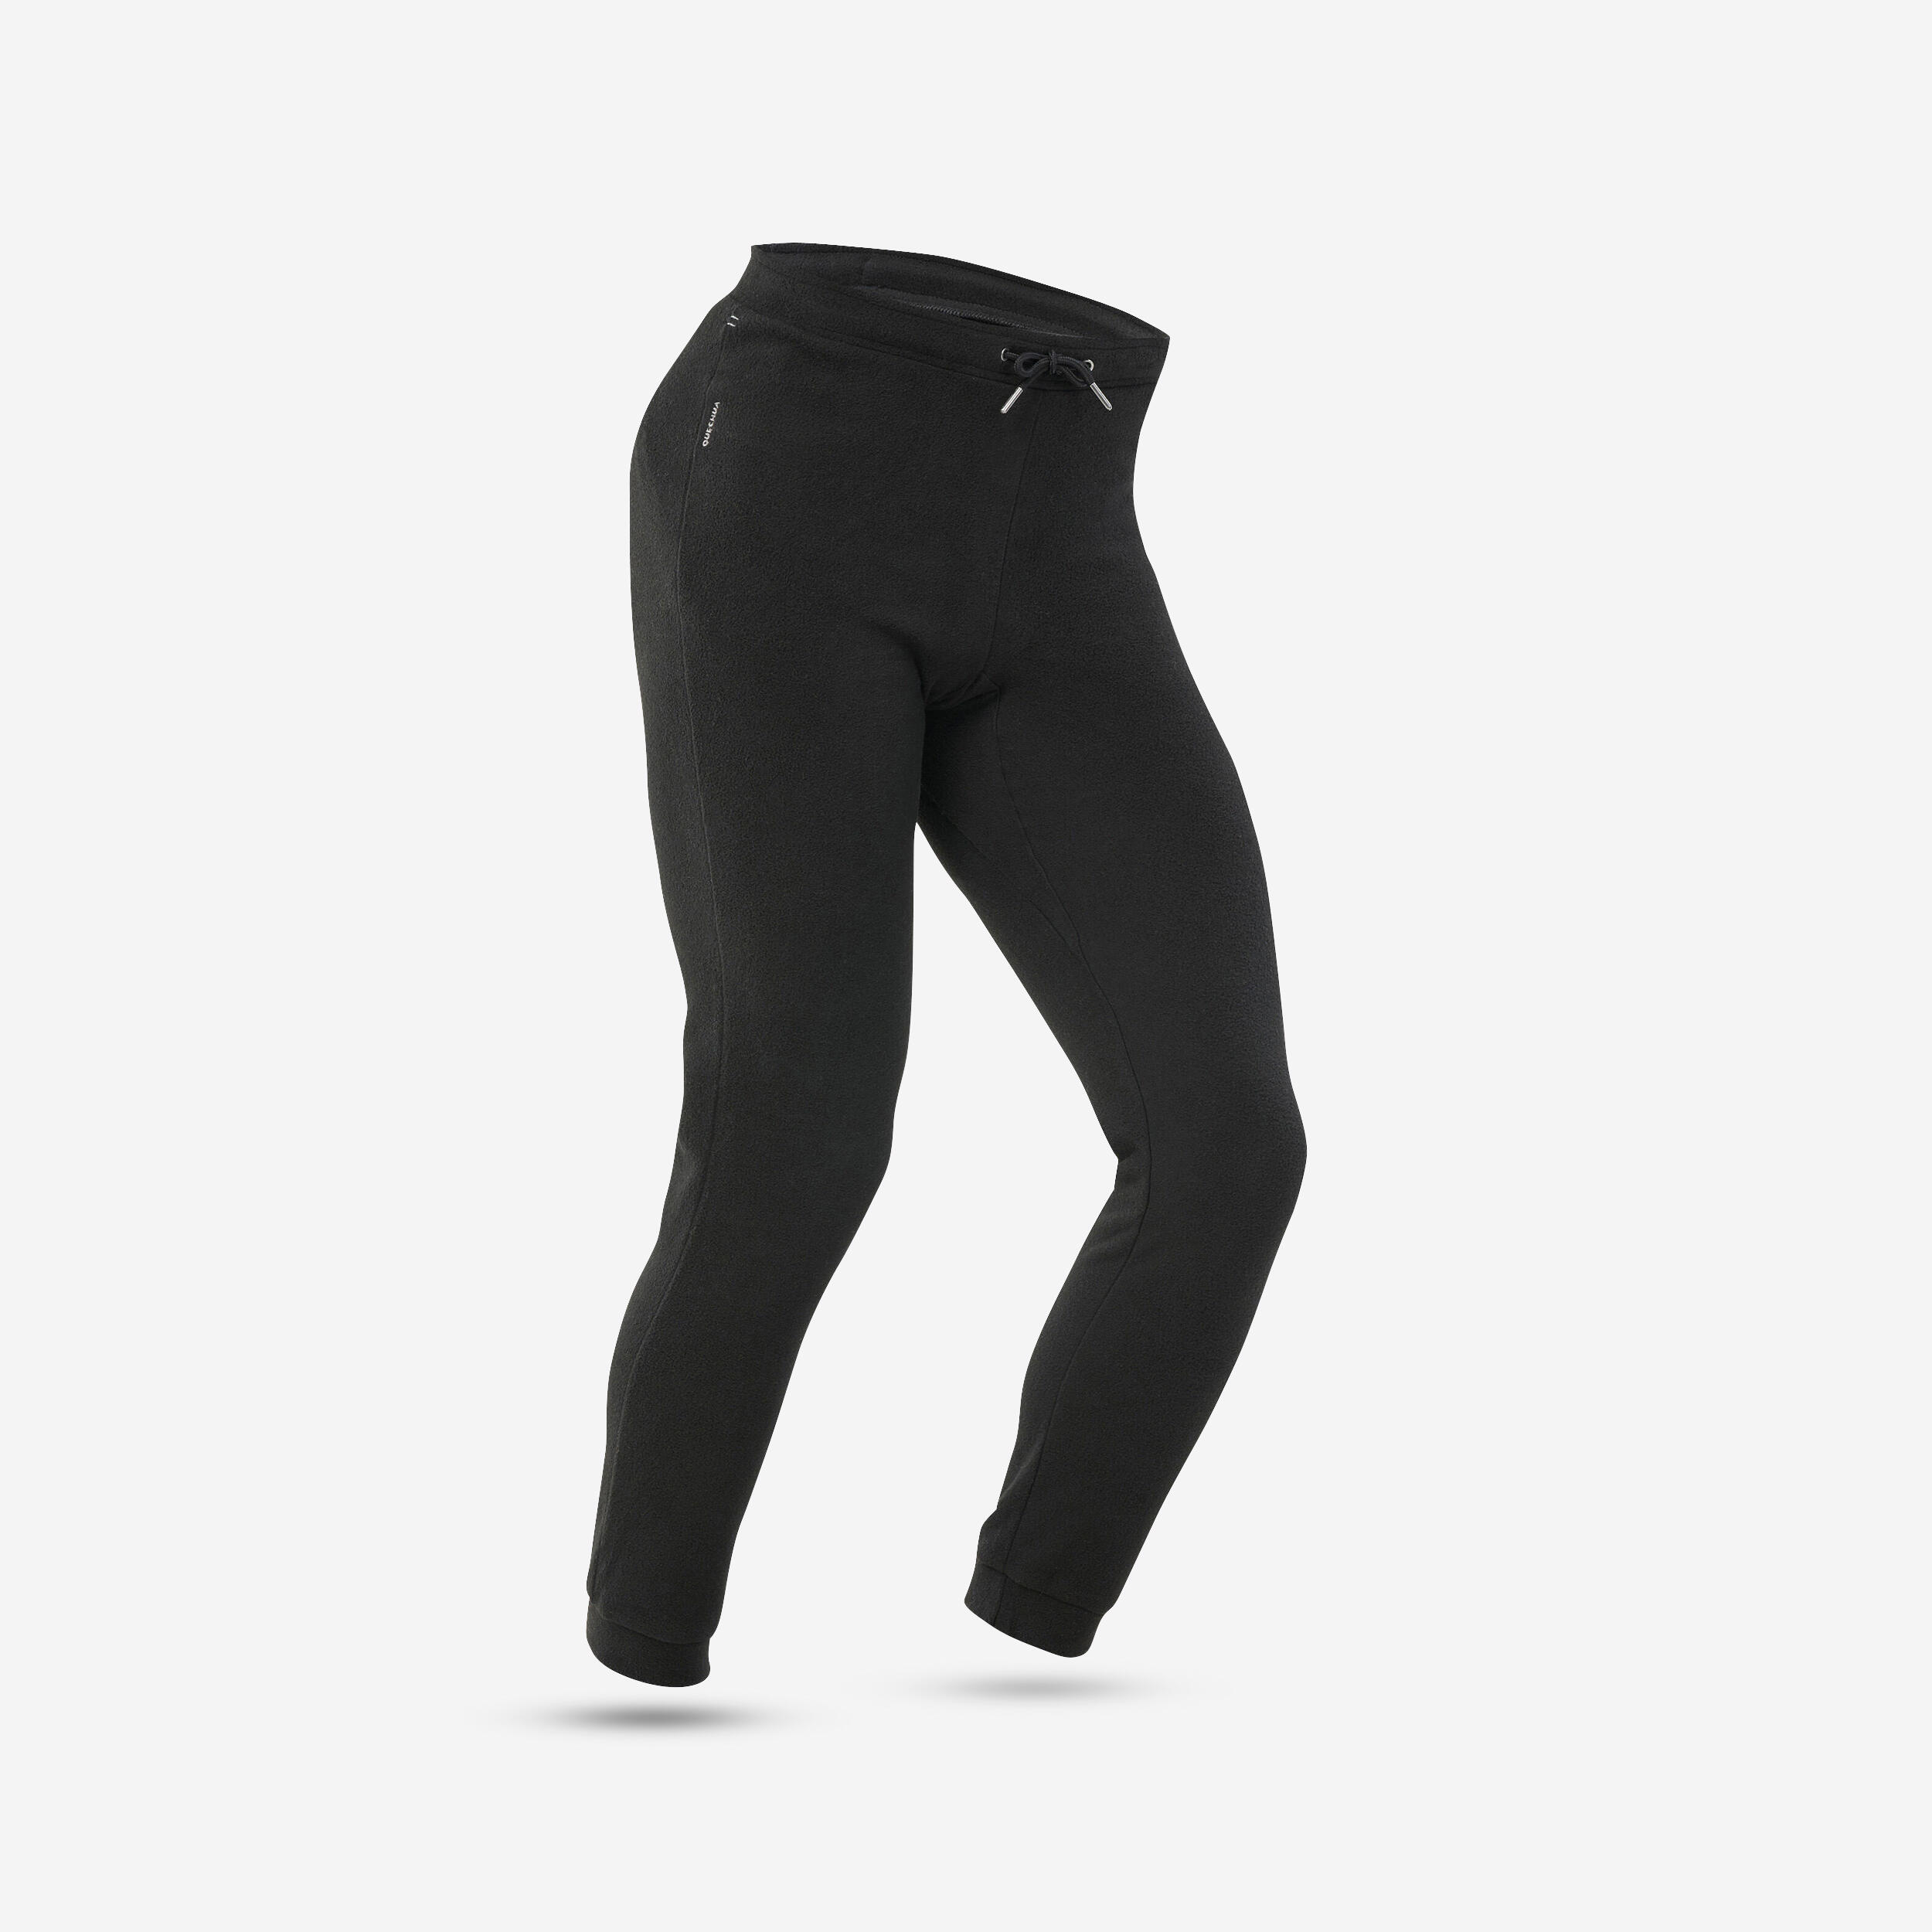 Decathlon - - BLACK Slim Fit Full Length Leggings - Size 8 to 20/22 (S to  3XL)